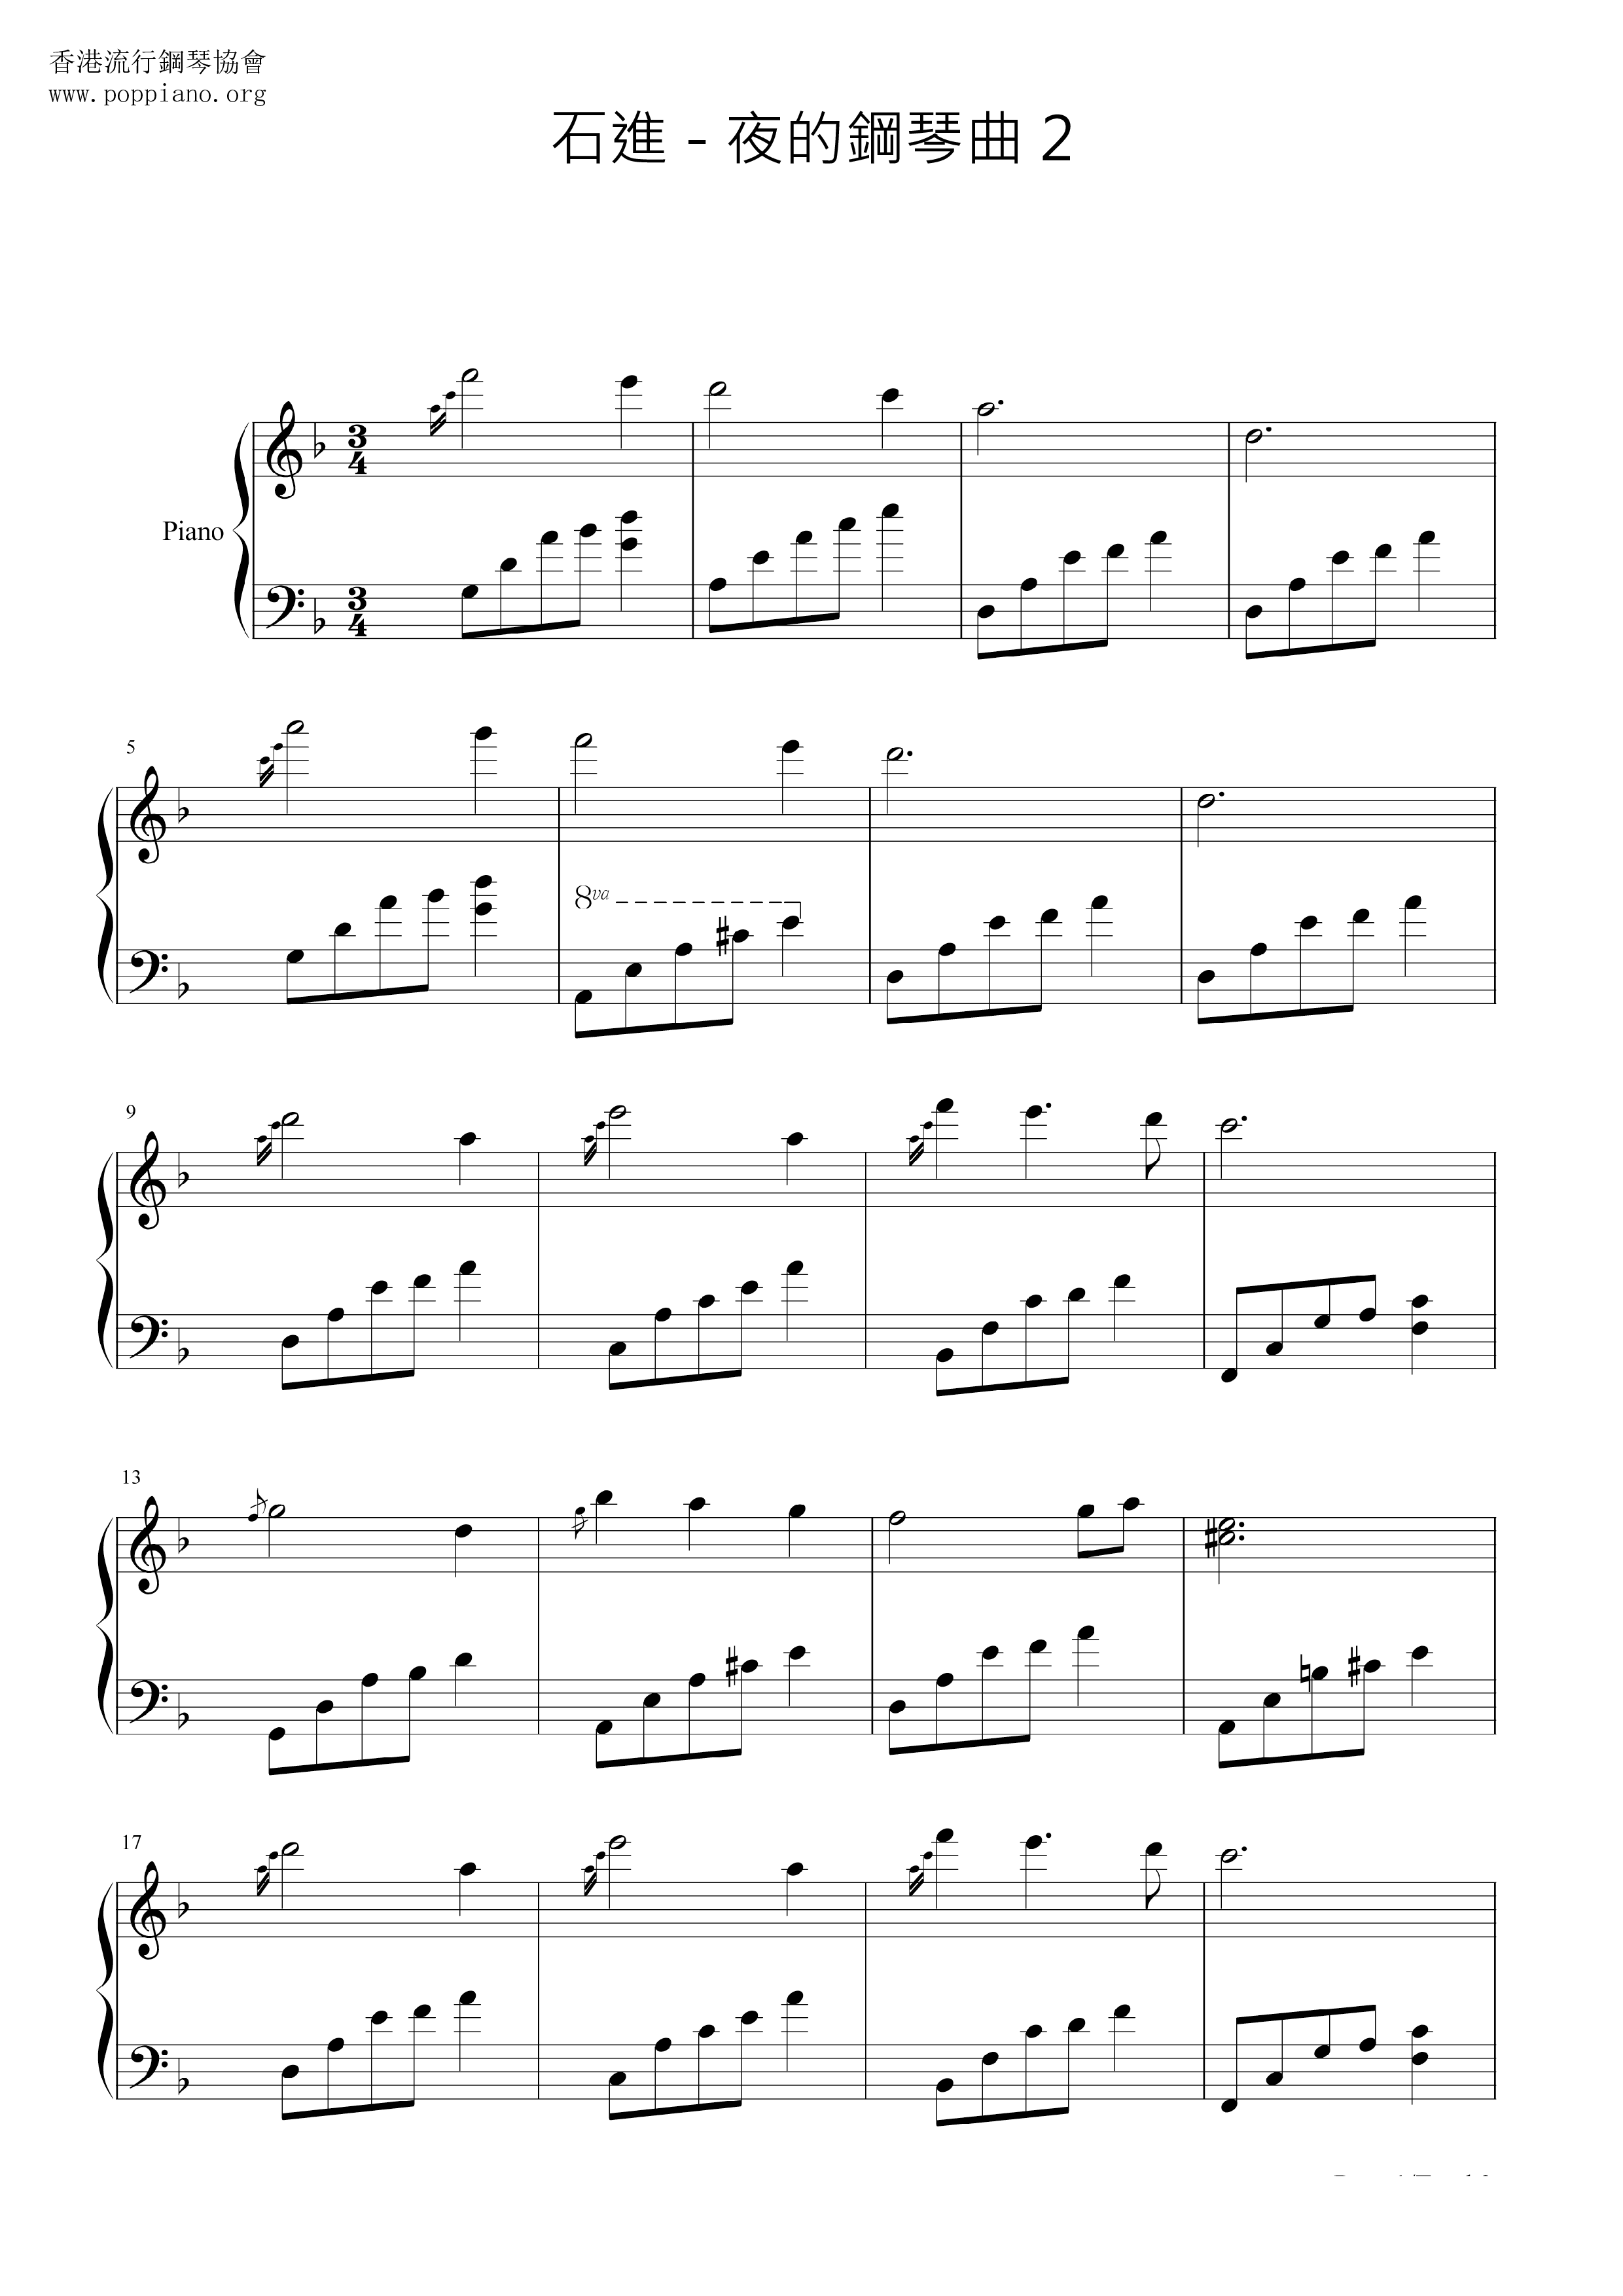 Melody Of The Night 2 Score